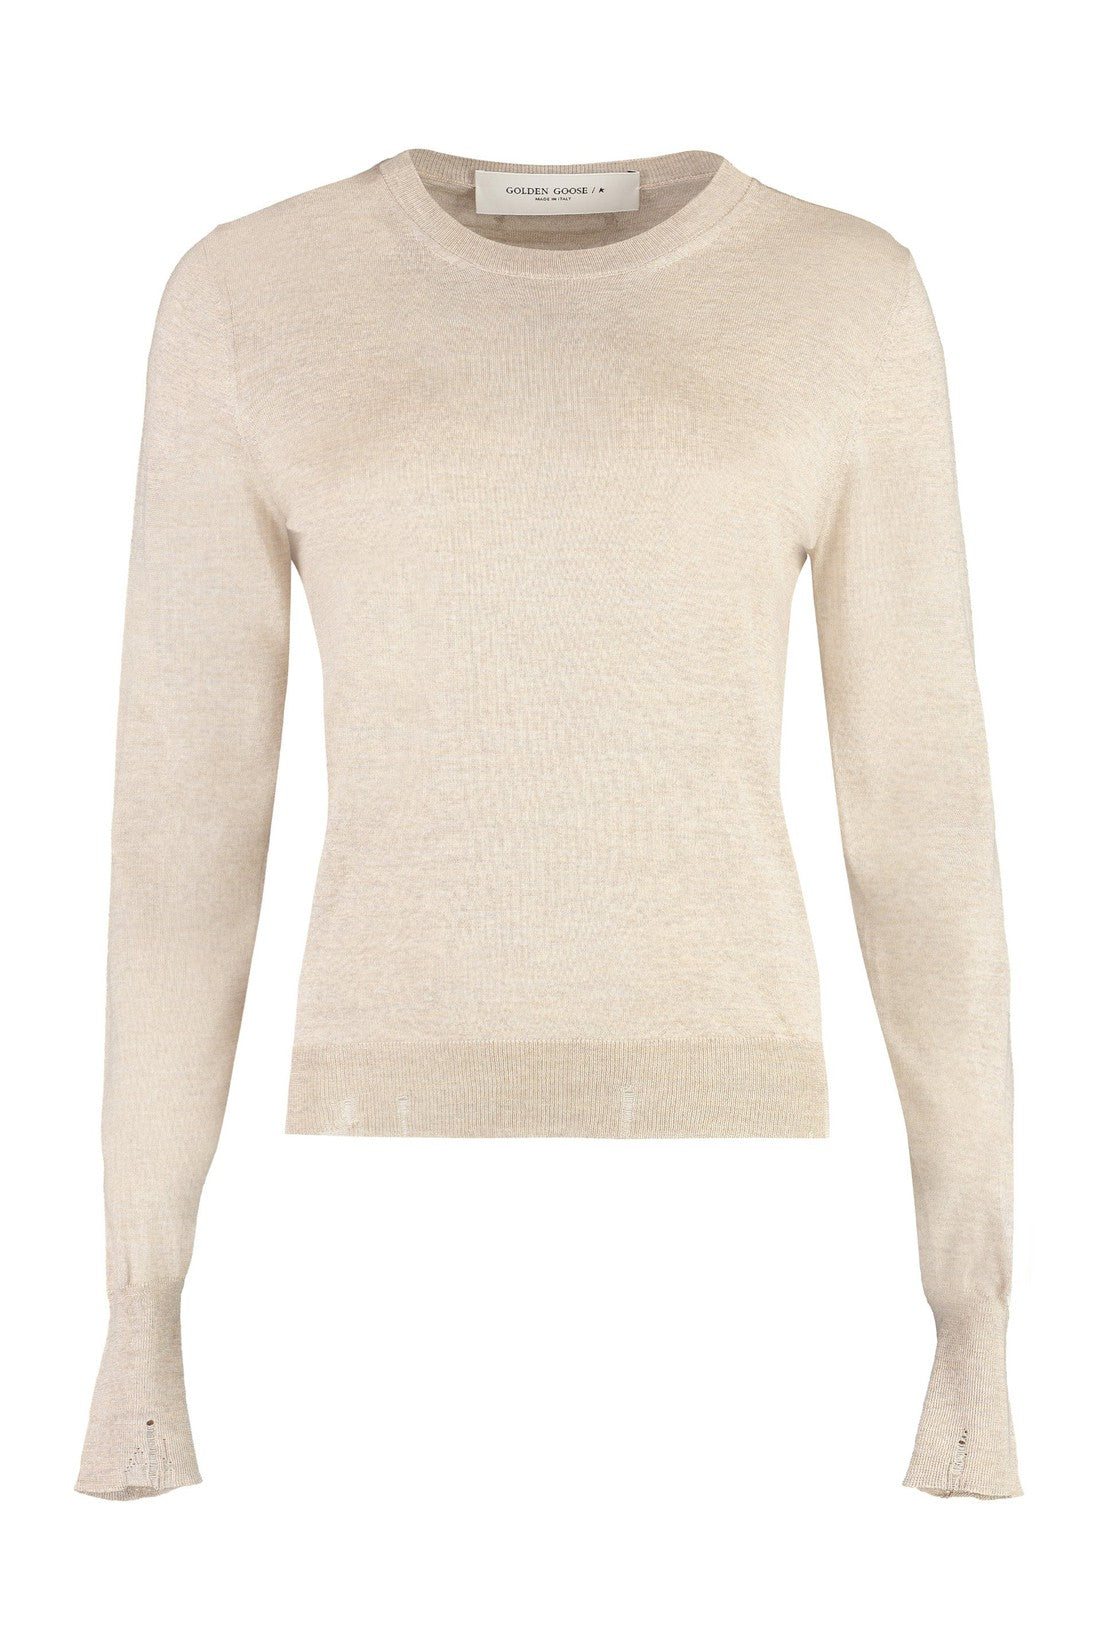 Golden Goose-OUTLET-SALE-Crew-neck wool sweater-ARCHIVIST